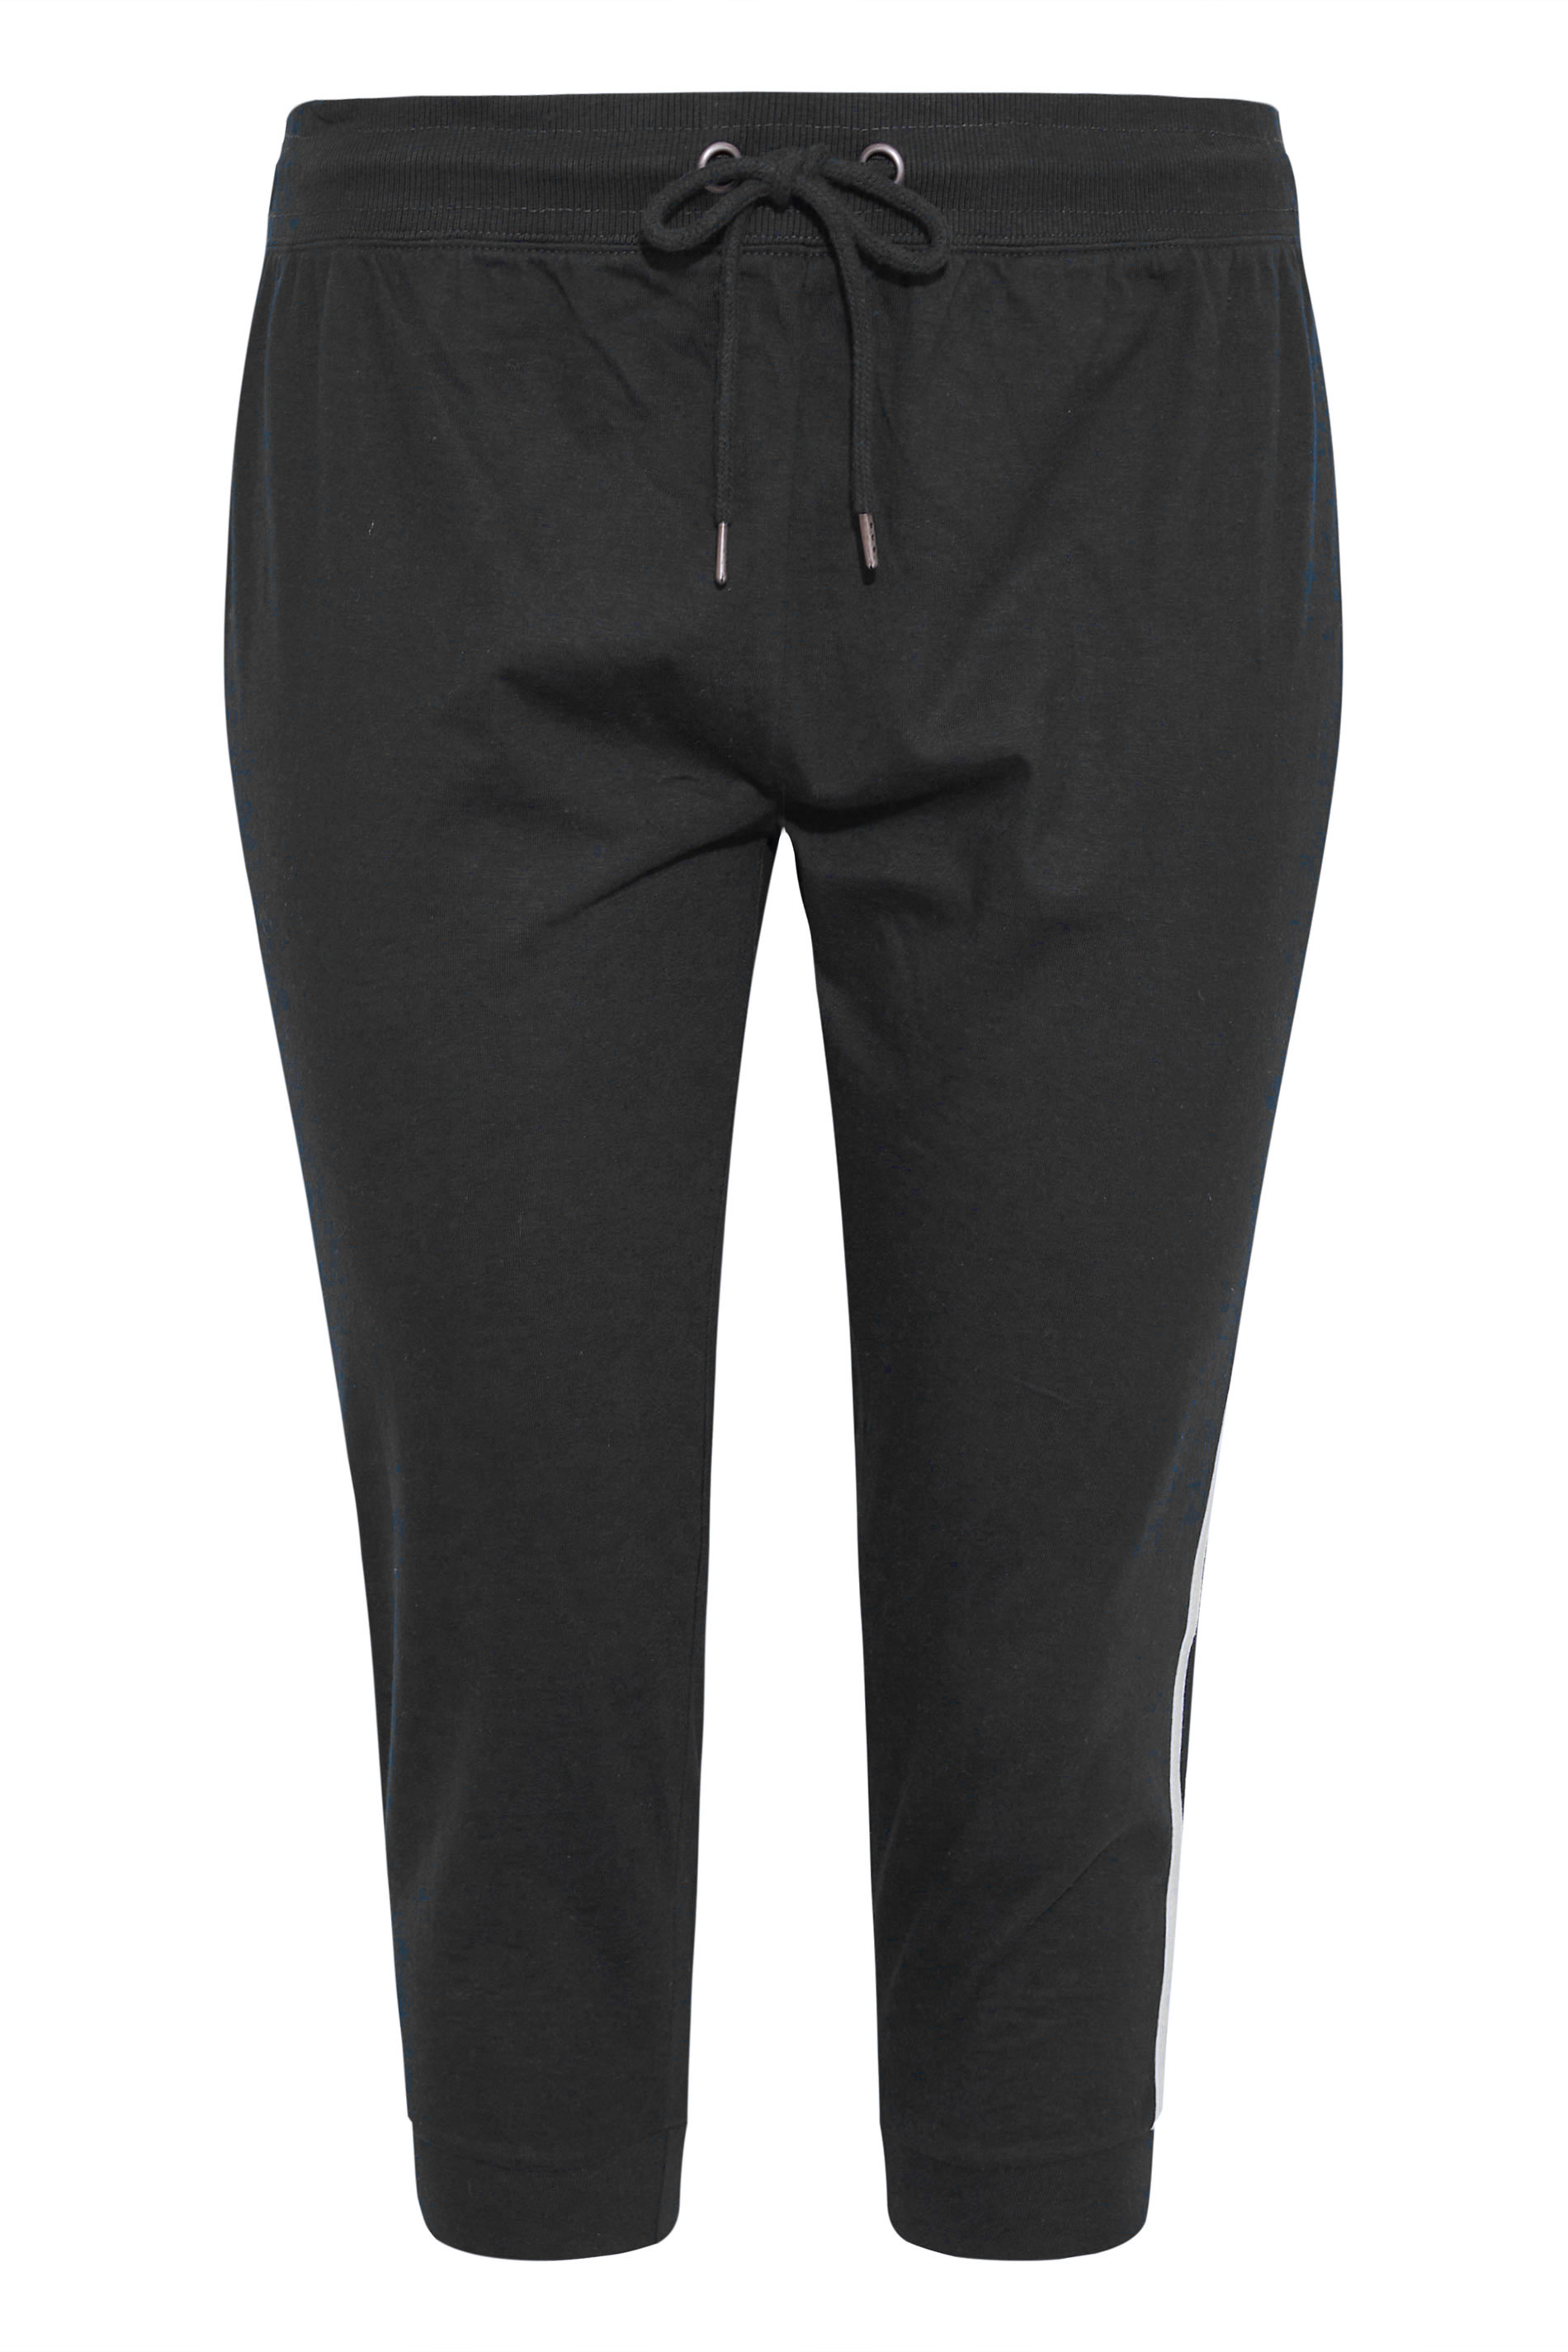 Grande taille  Pantalons Grande taille  Joggings | Jogging en Jersey Noir Bandes Blanches - CT60588